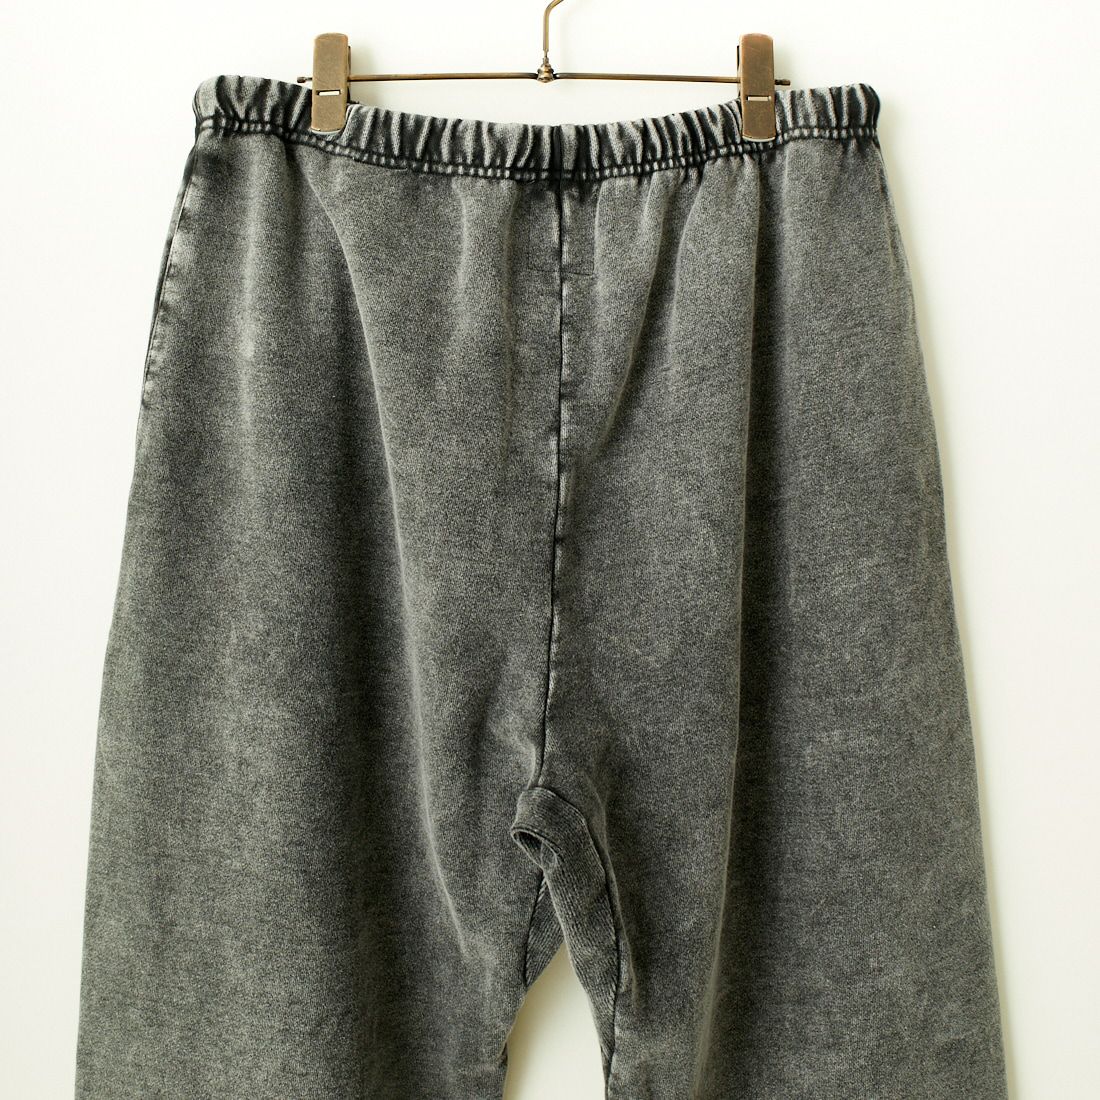 Jeans Factory Clothes [ジーンズファクトリークローズ] アシッド加工スウェットパンツ [2421-409IN] BLACK